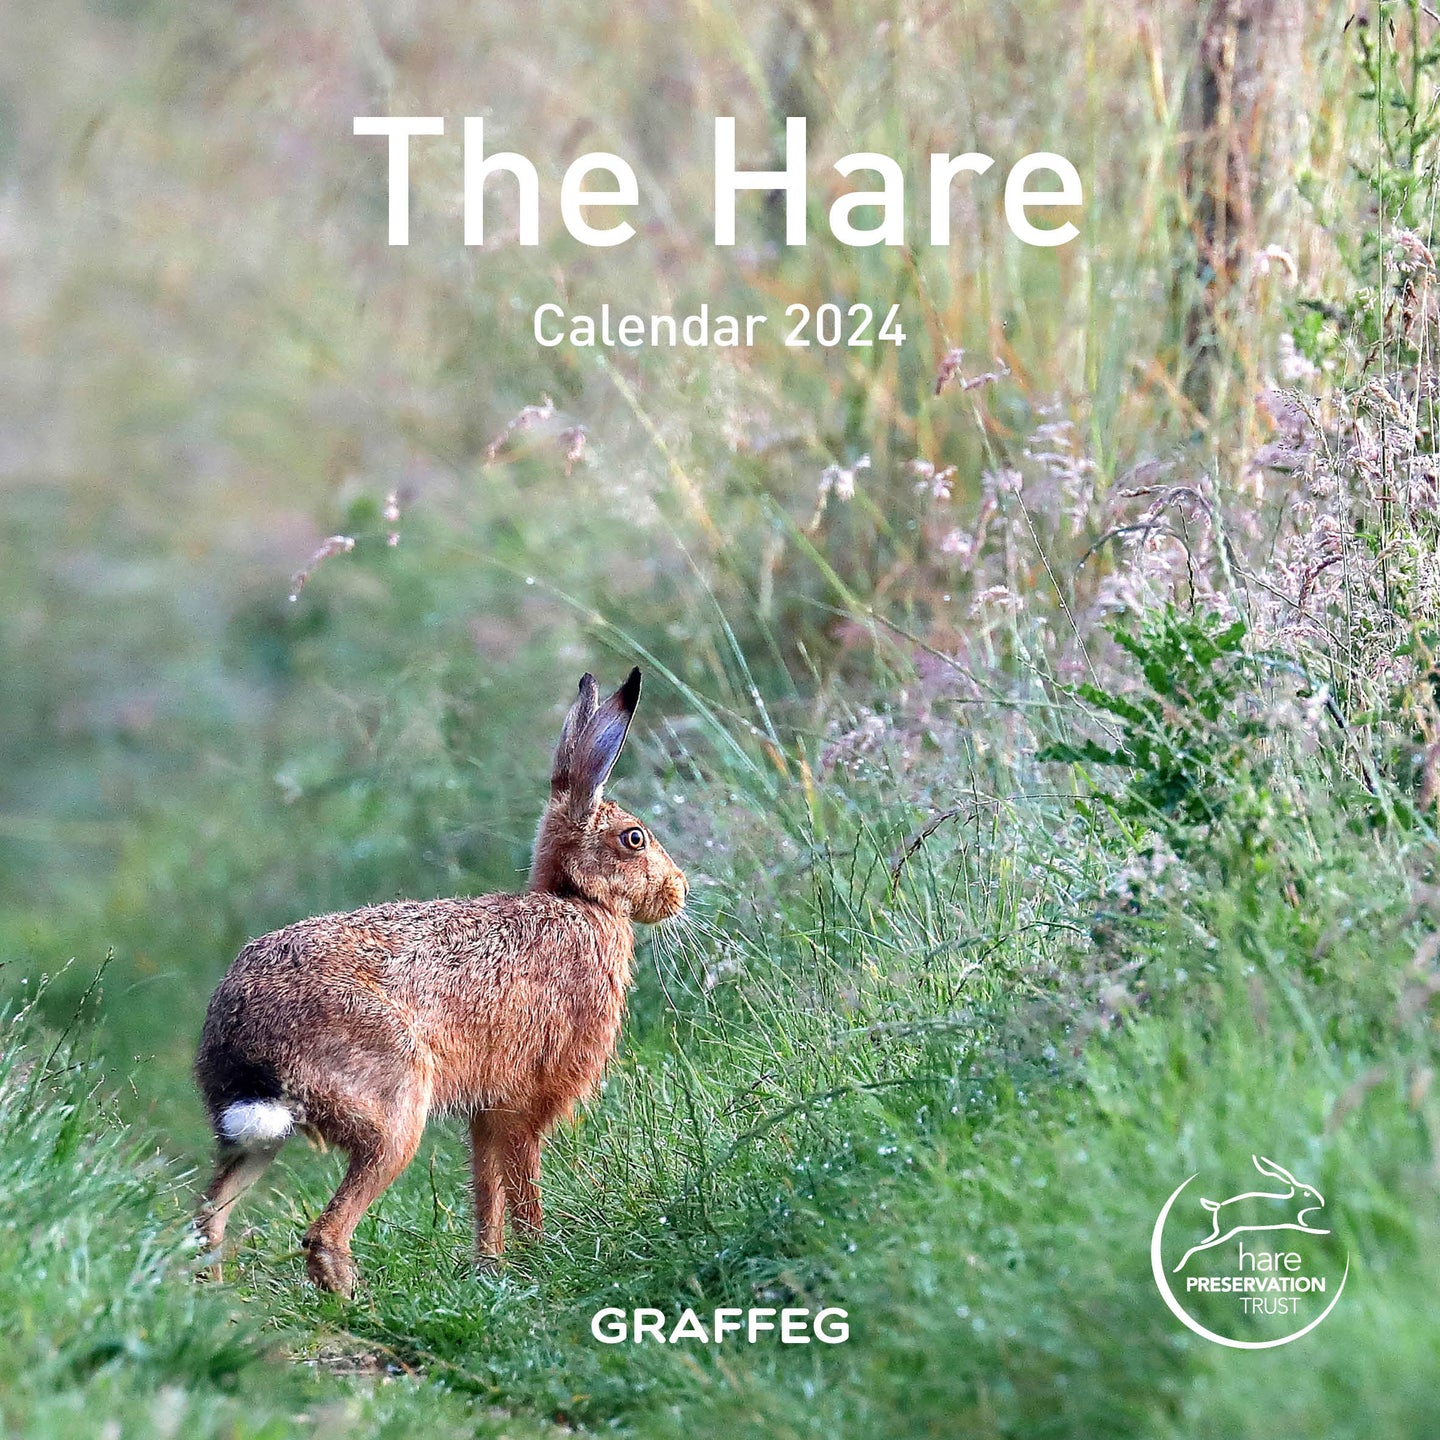 The Hare Calendar 2024